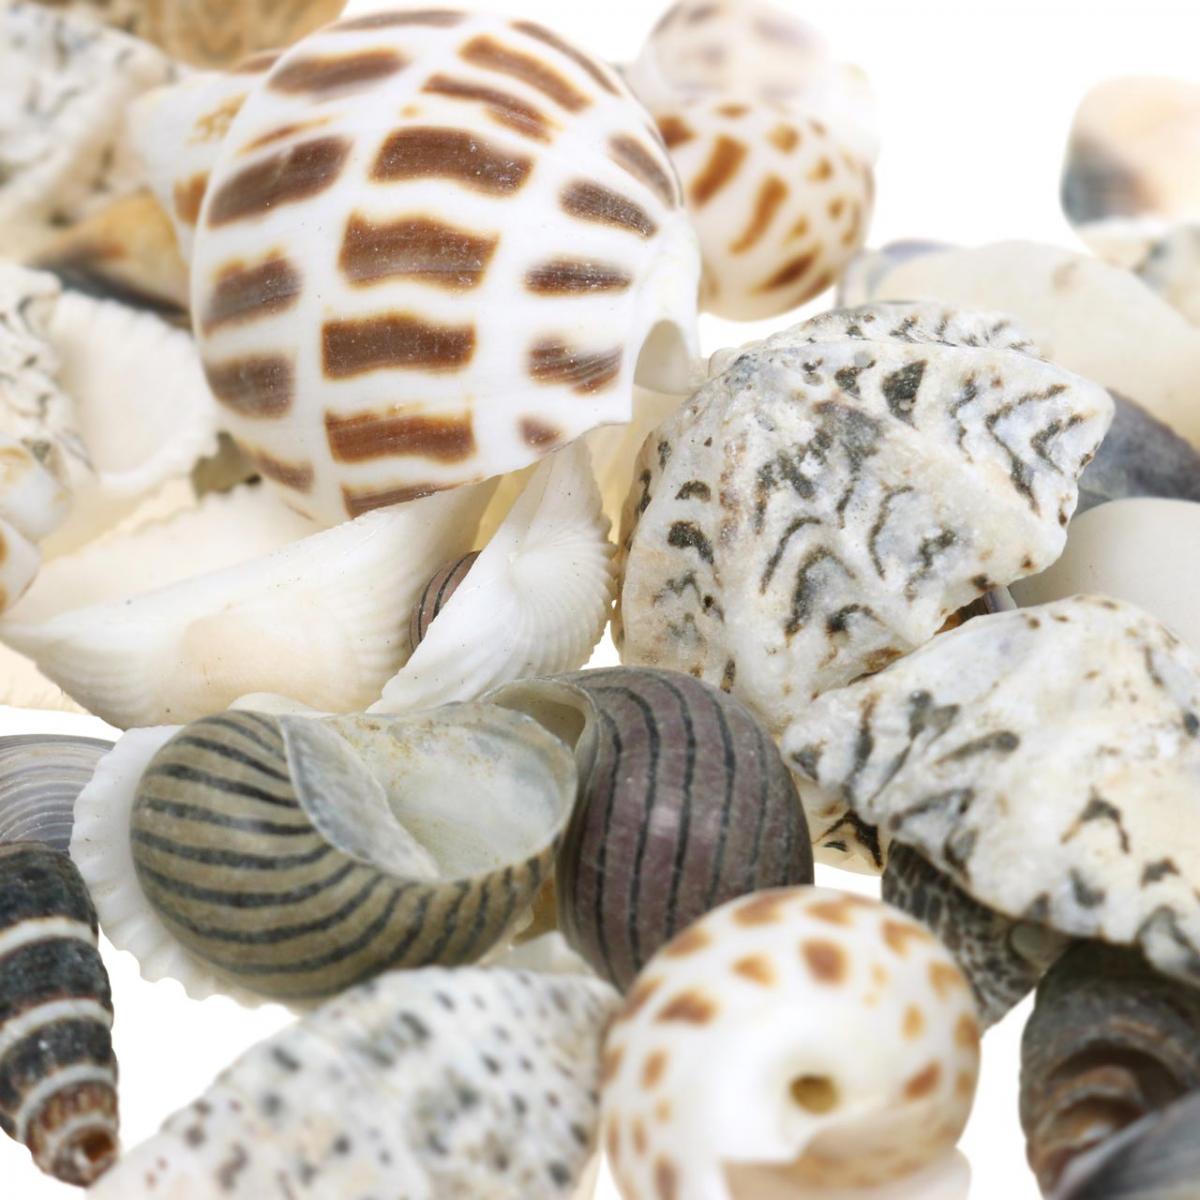 Snail Shells Shell Mix Nature 1020g